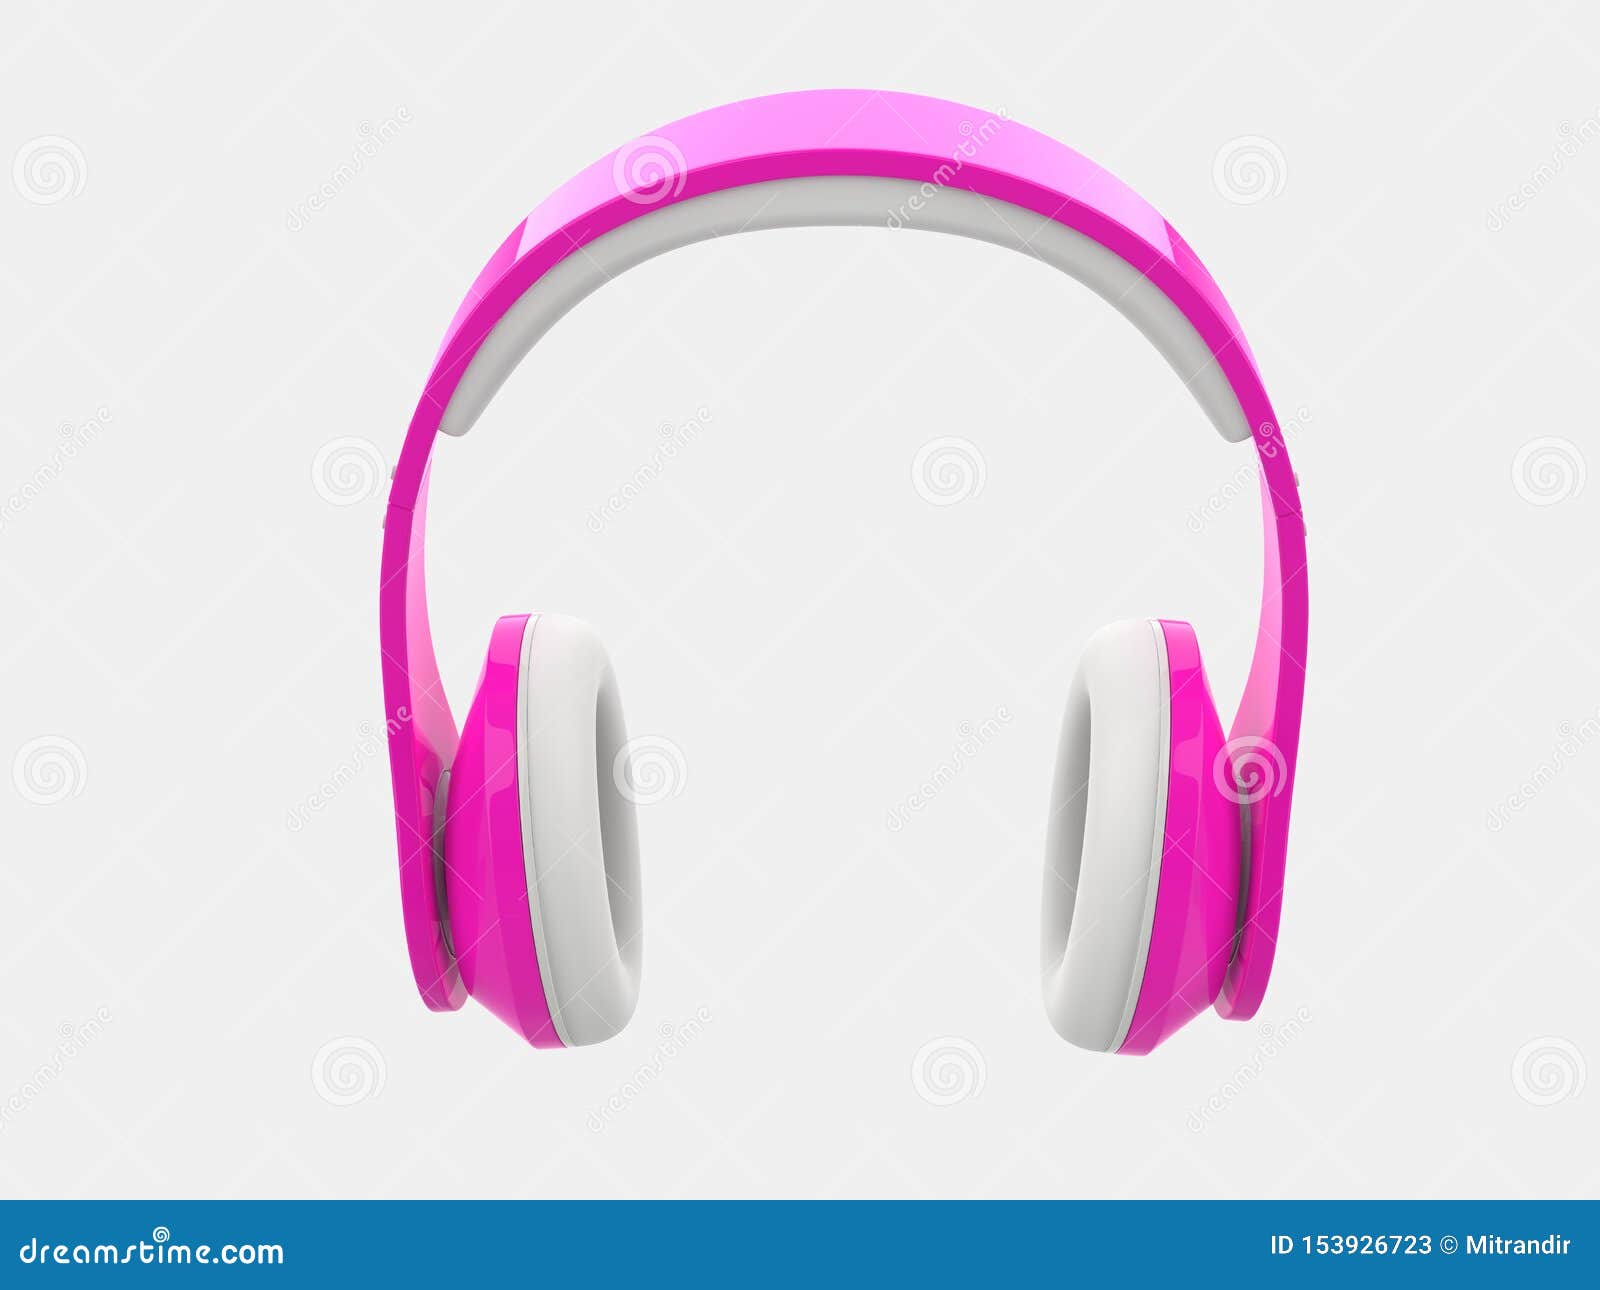 pink headphones clipart dreamstime